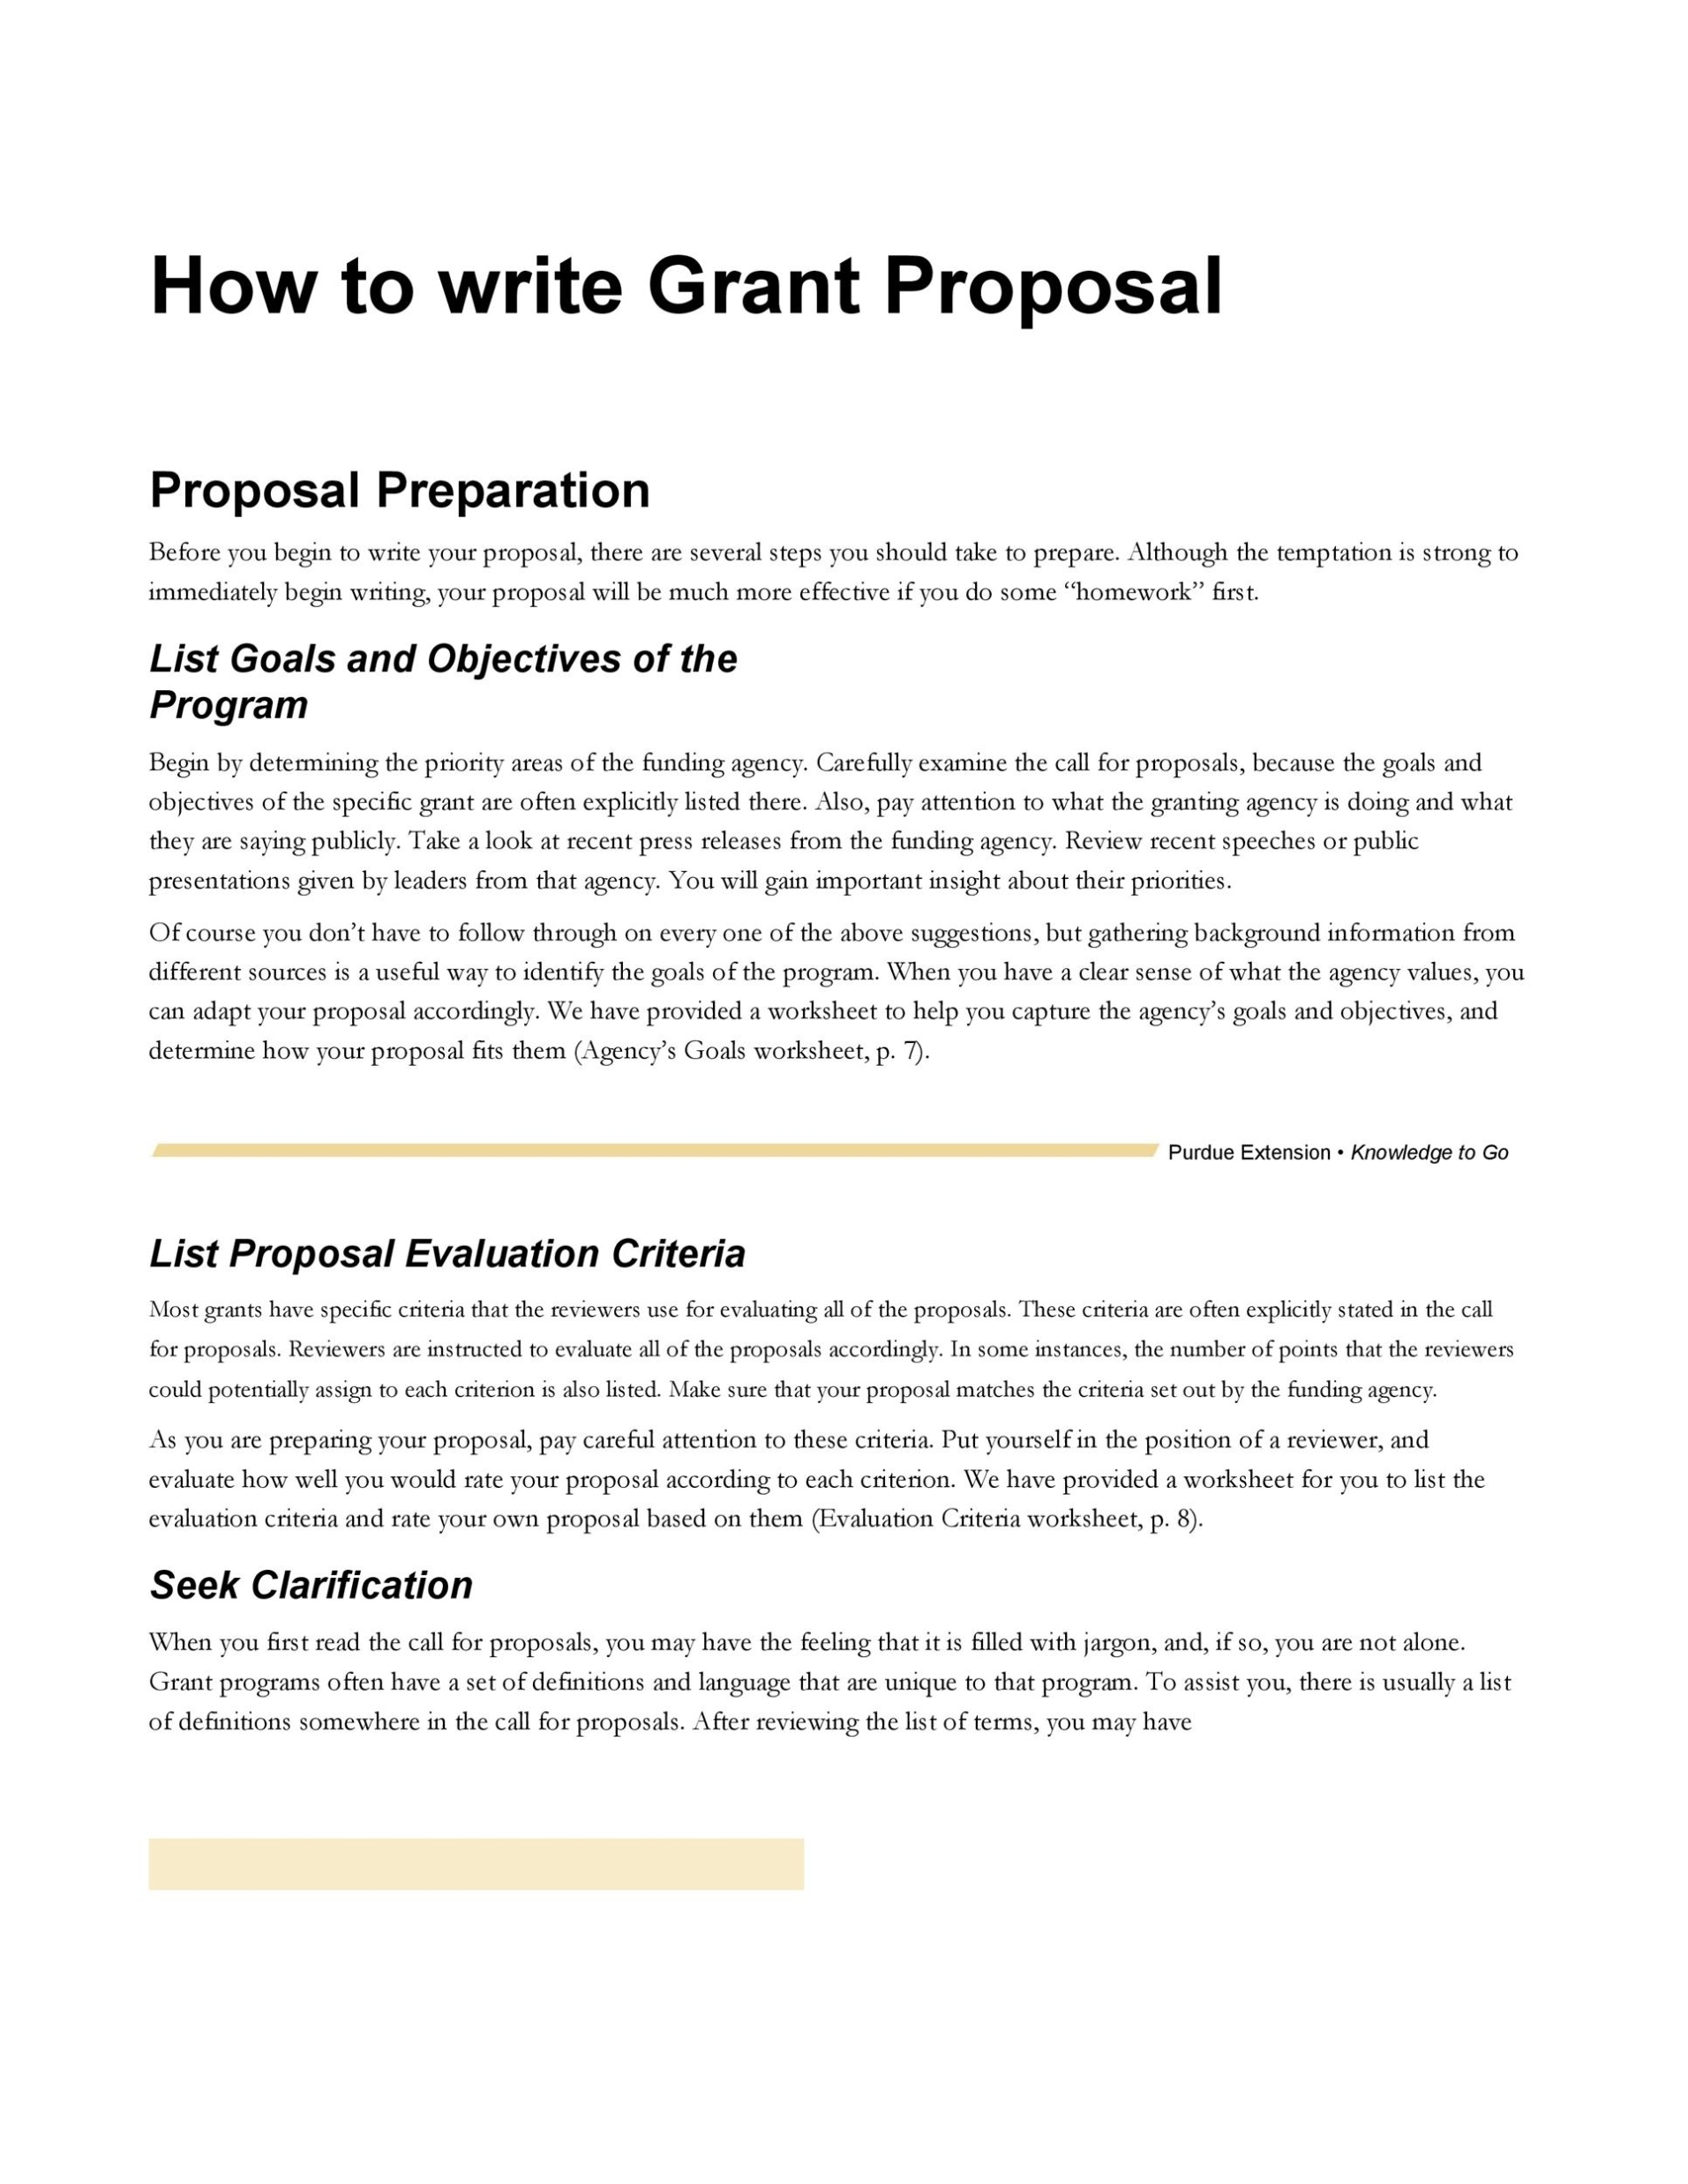 40+ Grant Proposal Templates [Nsf, Non-Profit, Research] ᐅ Templatelab within Nsf Proposal Template